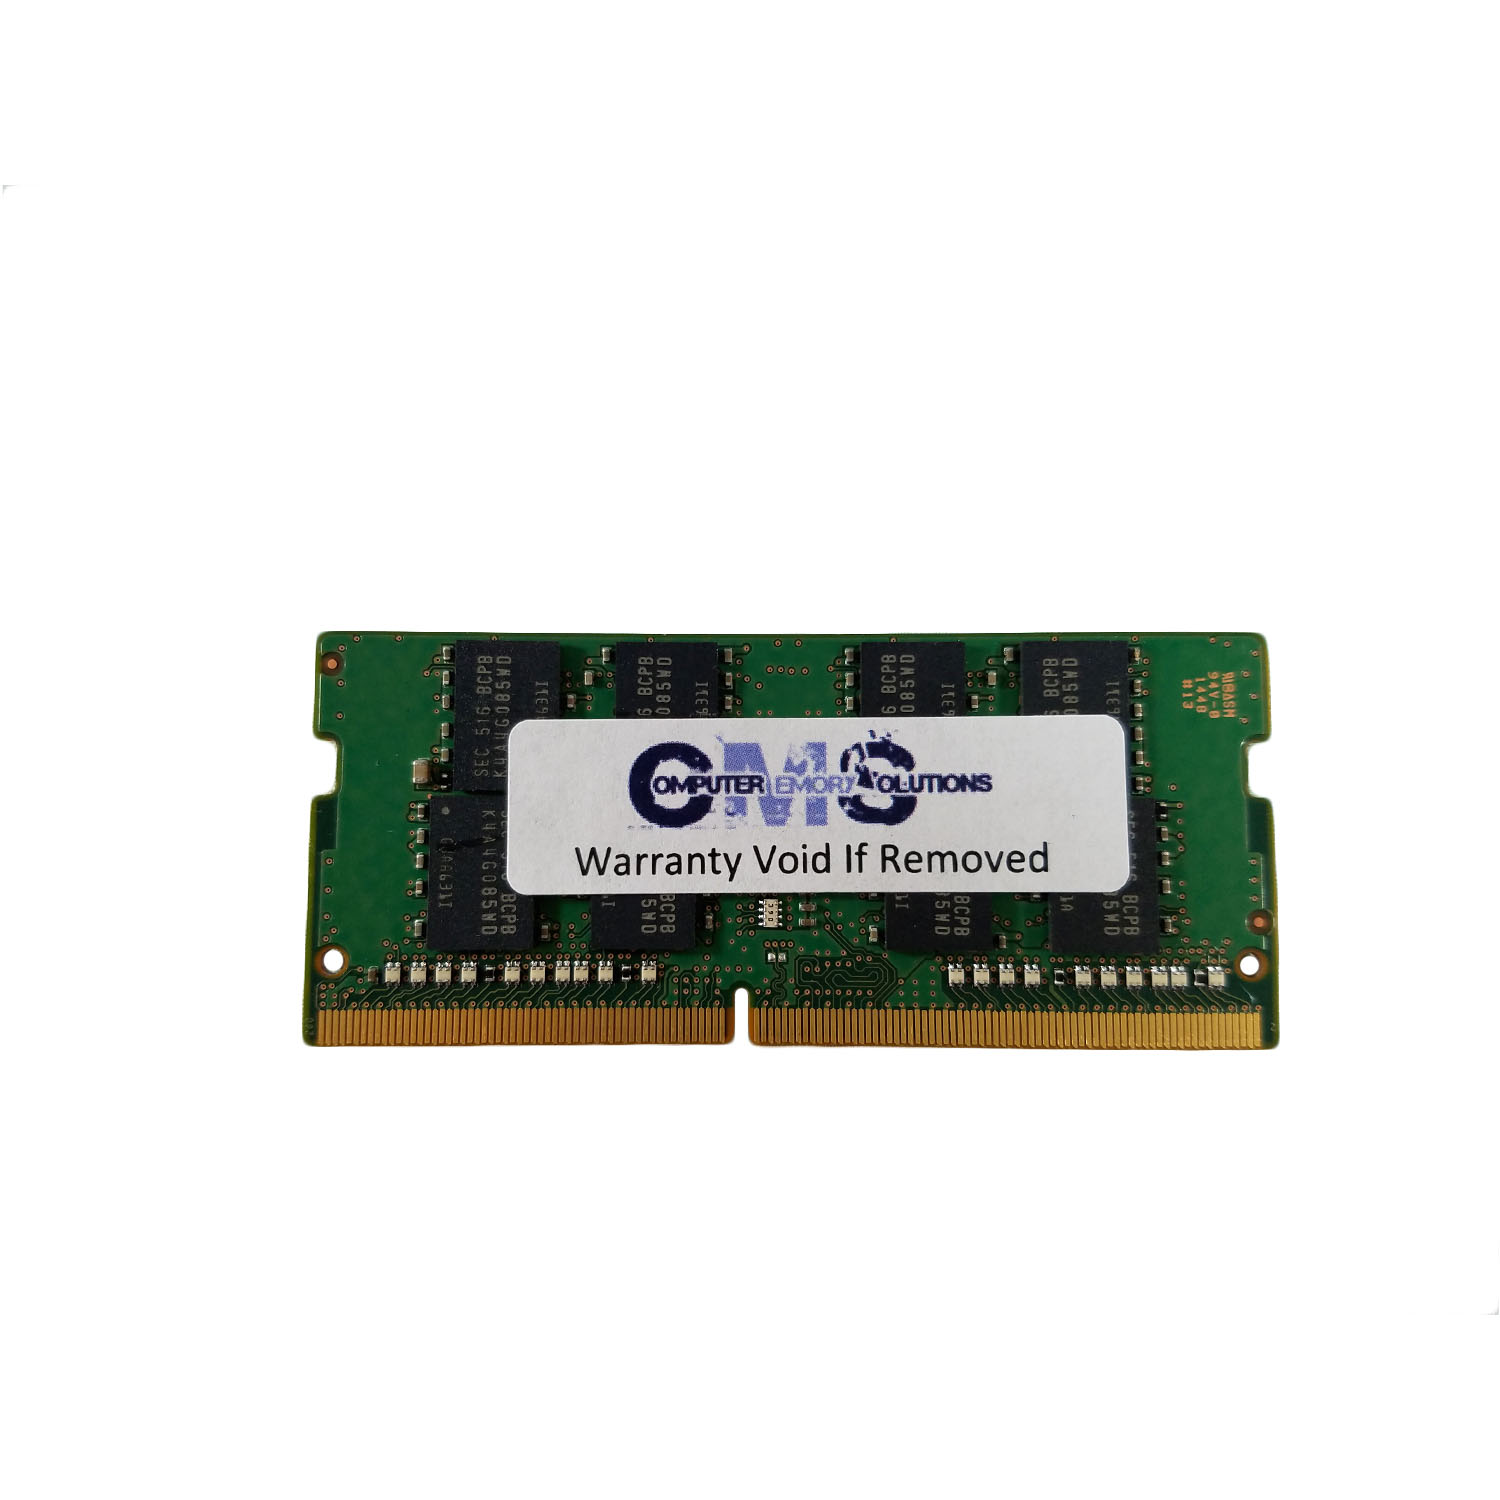 CMS 16GB (1X16GB) DDR4 19200 2400MHZ Non ECC SODIMM Memory Ram Upgrade Compatible with Lenovo® IdeaPad S340-14IML (14) Series, Yoga 510-14AST, Yoga 510-14IKB, Yoga 510-14ISK - C107 - image 1 of 3